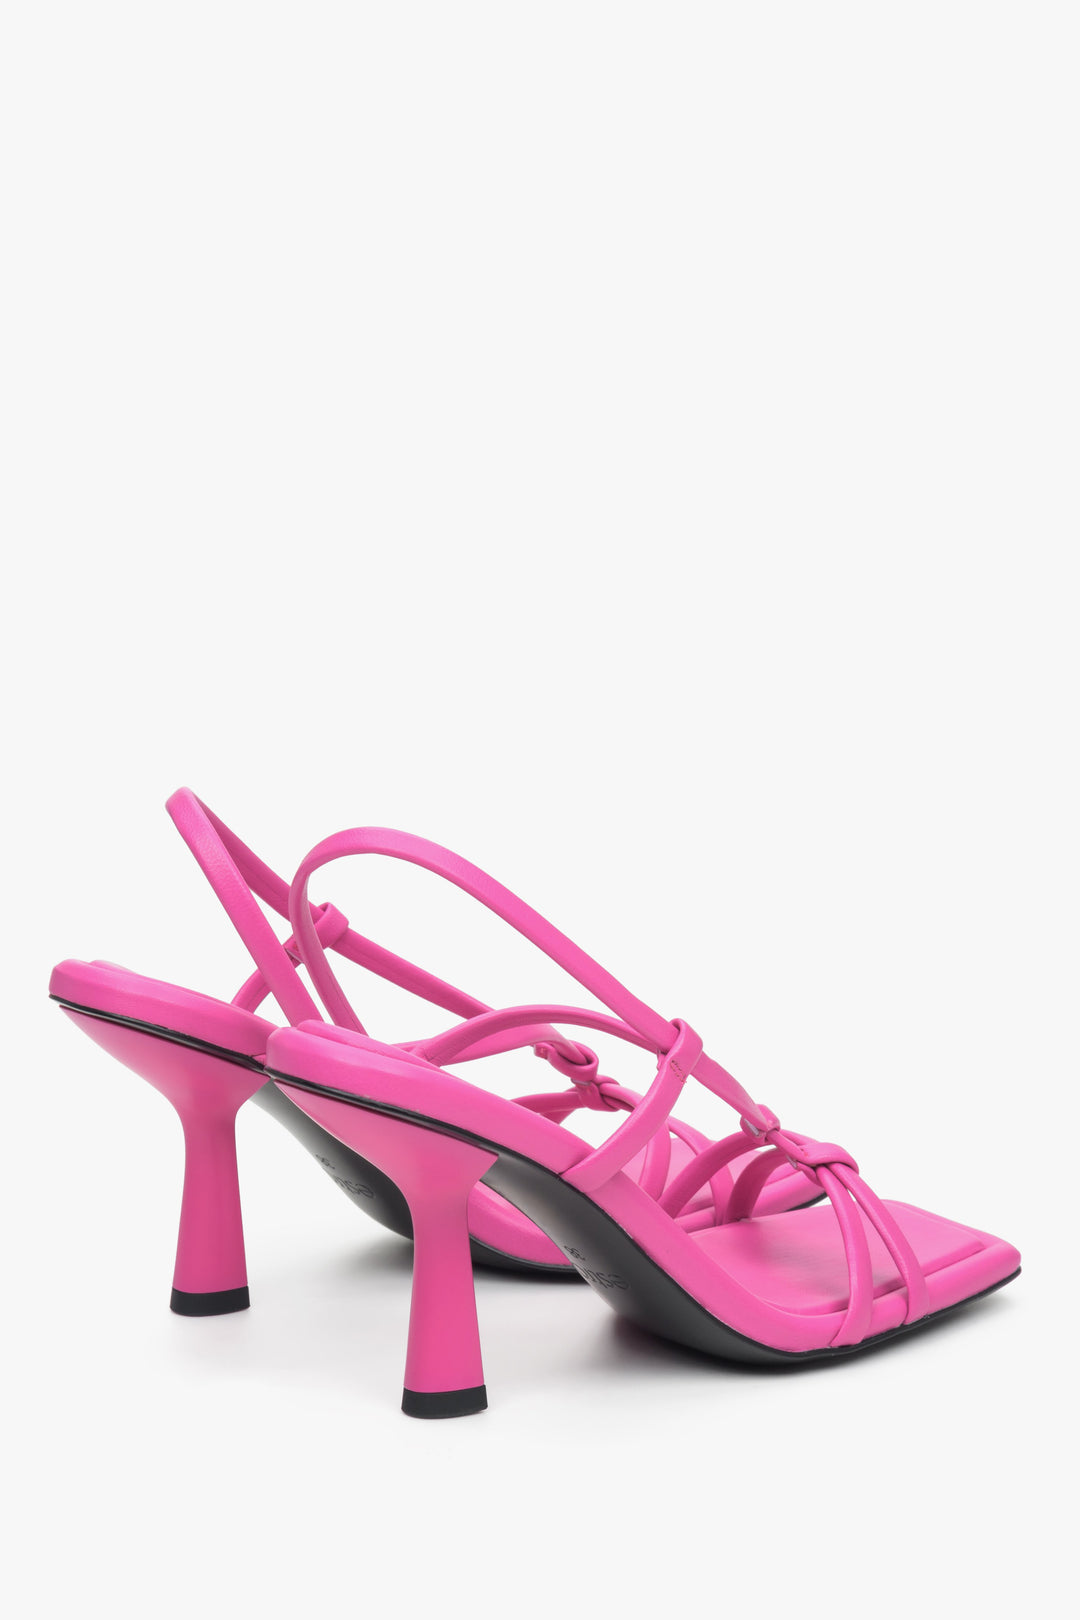 Różowe sandały damskie na obcasie ze skóry naturalnej Estro - zbliżenie na obcas i linię boczną butów.